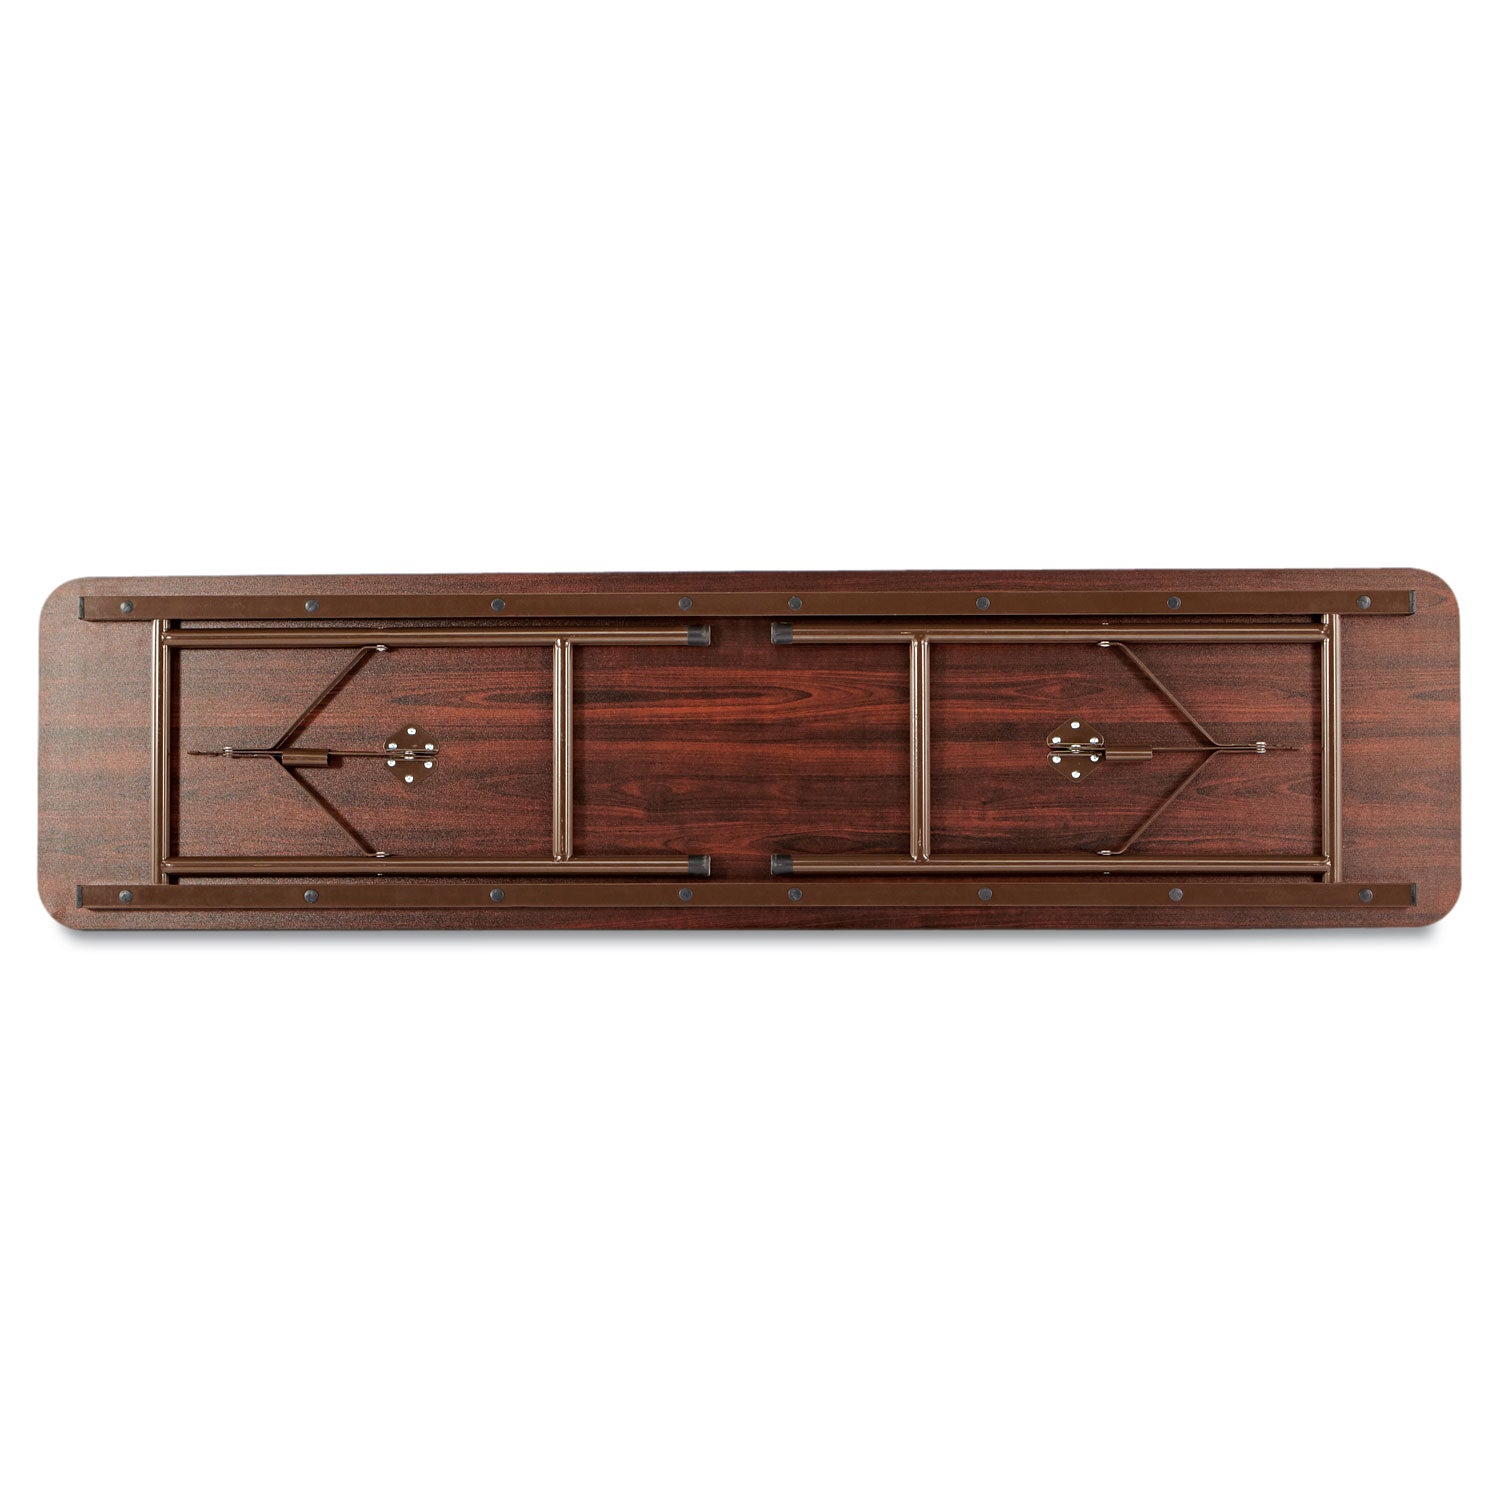 wood-folding-table-rectangular-7188w-x-1775d-x-2913h-mahogany_aleft727218my - 2